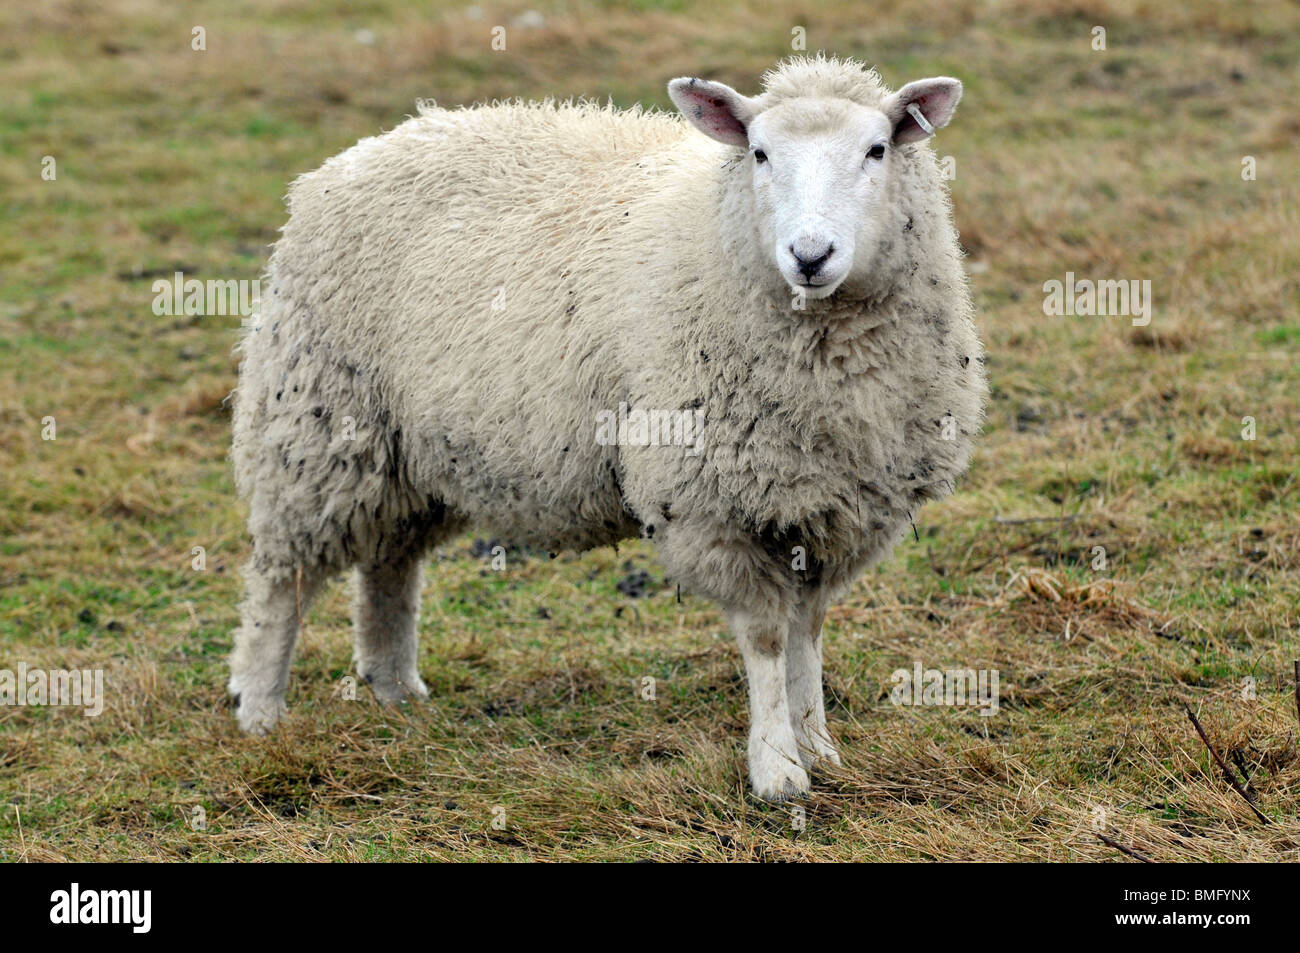 'Portland sheep' Stock Photo